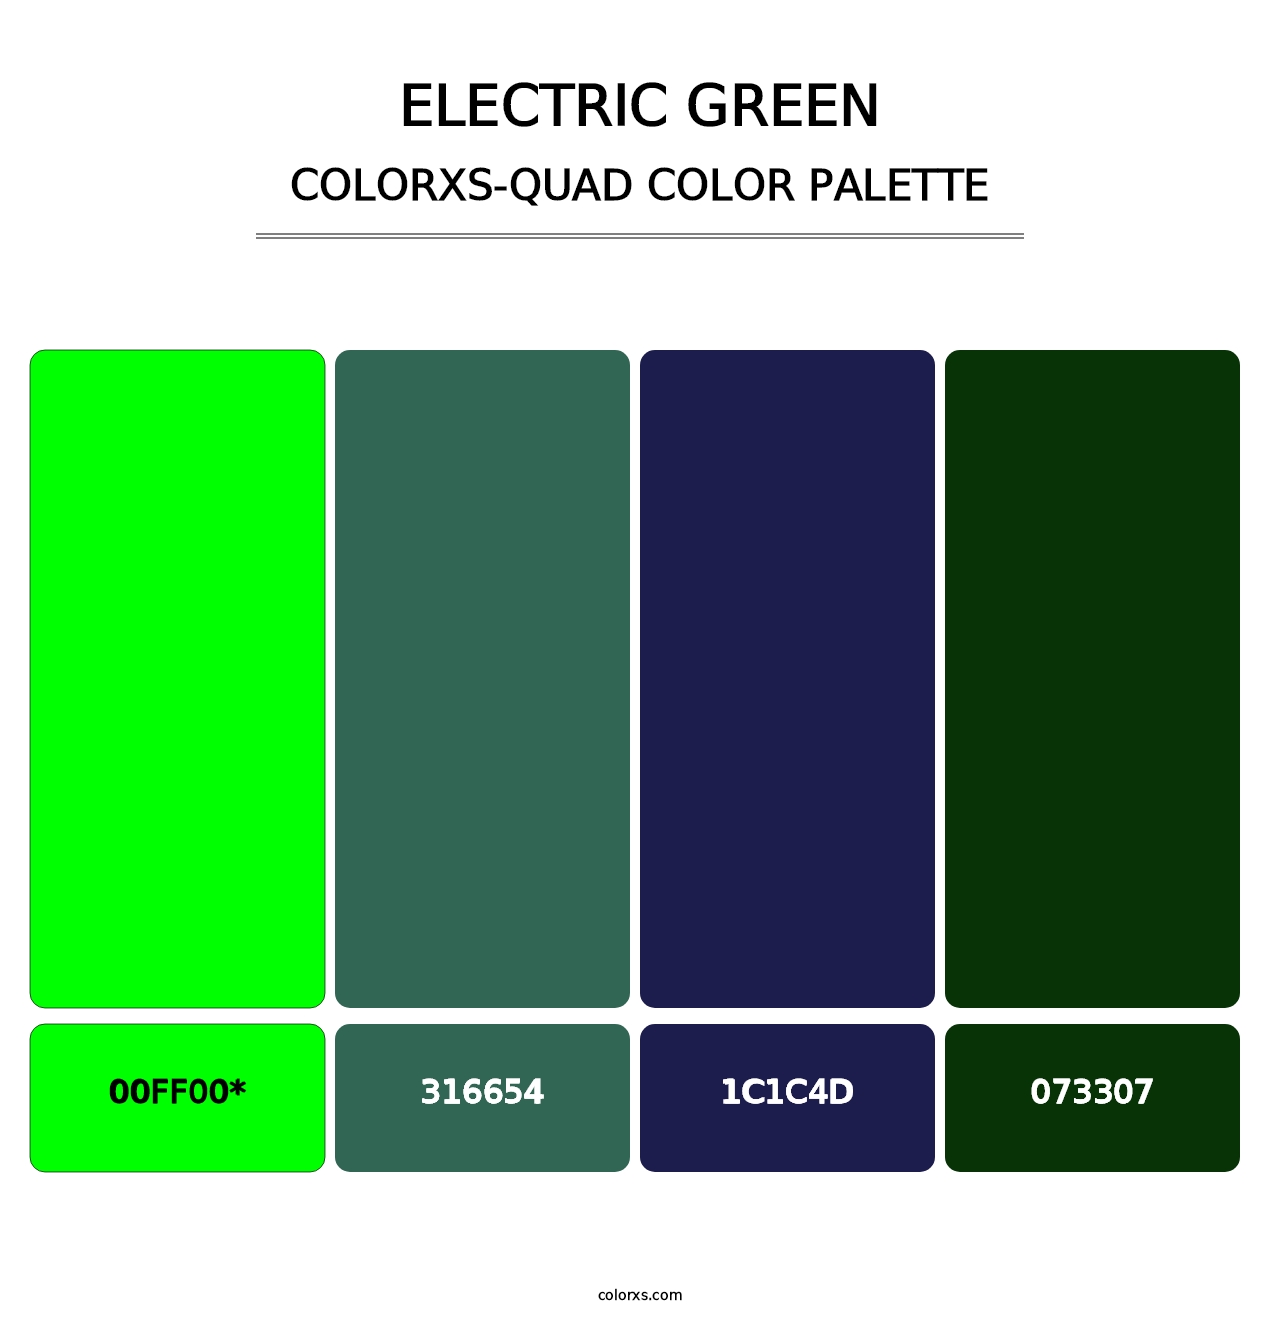 Electric Green - Colorxs Quad Palette